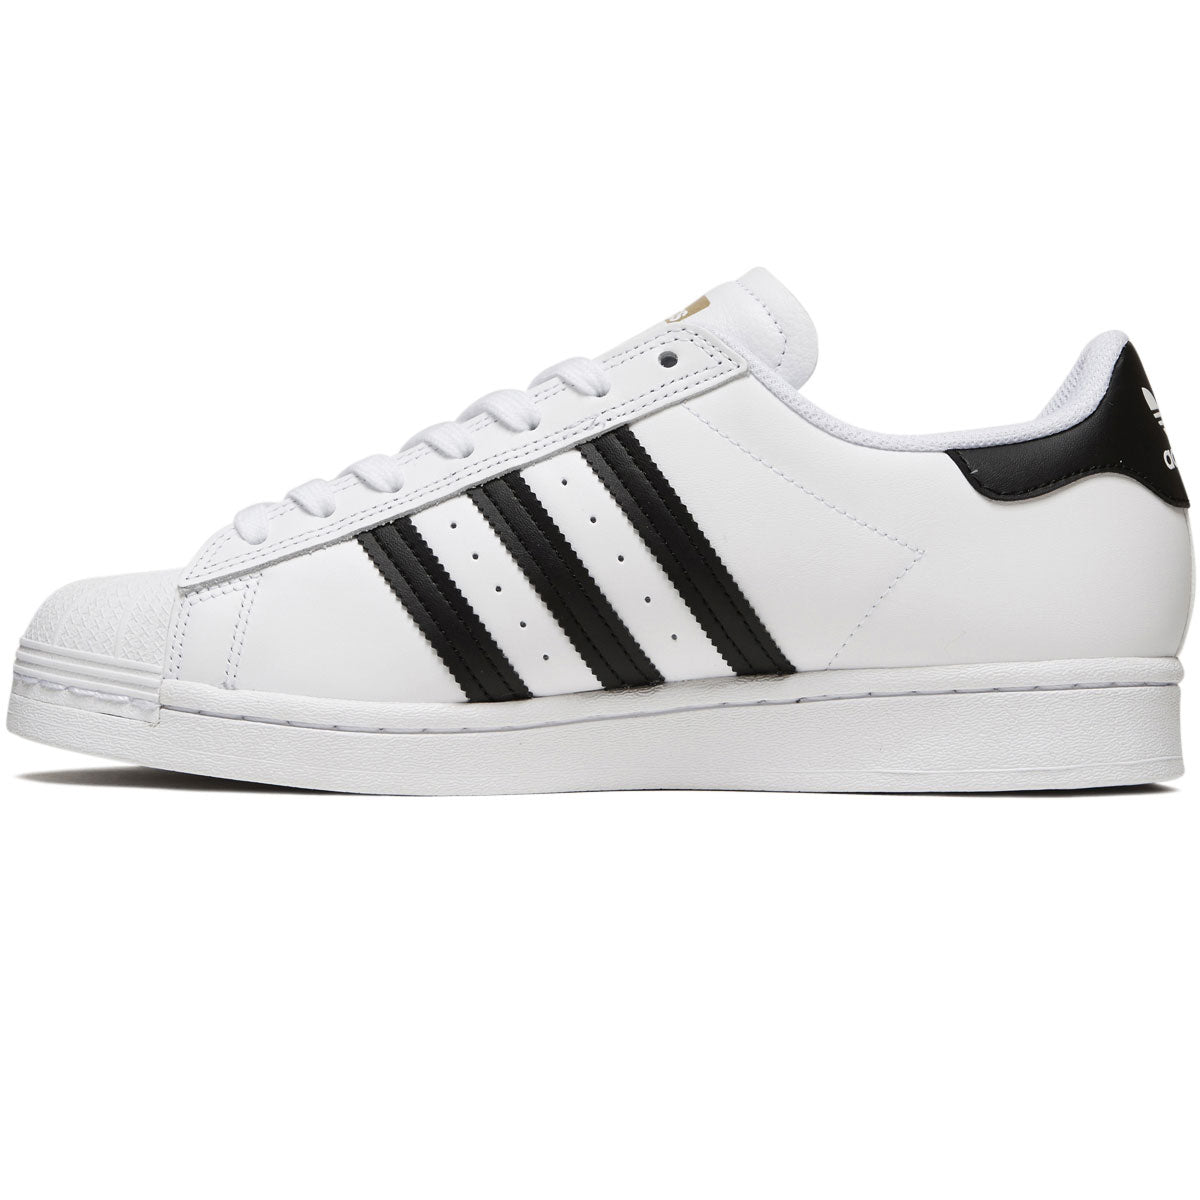 Adidas Superstar Adv Shoes - White/Core Black/White image 2